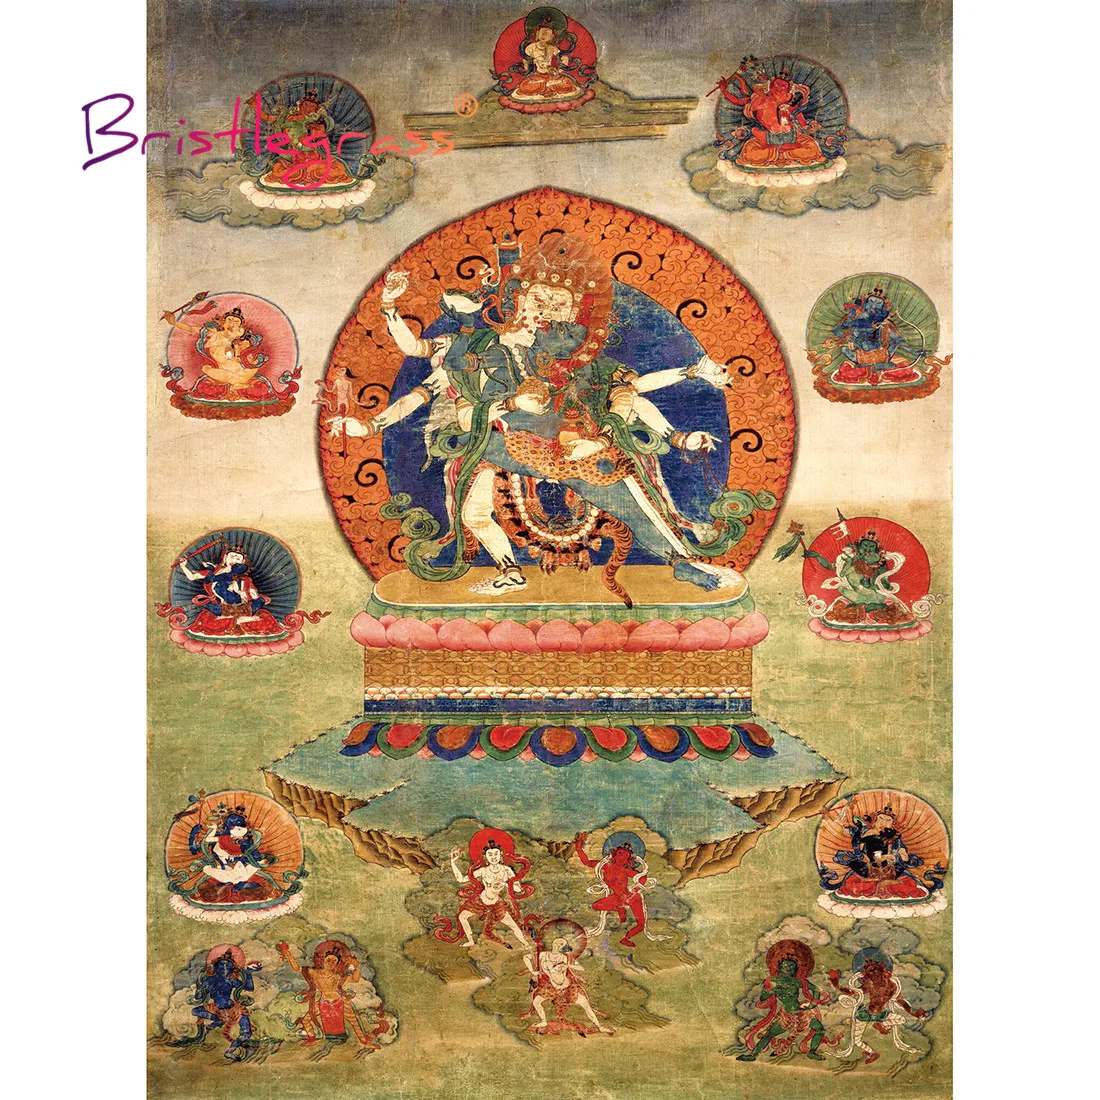 BRISTLEGRASS Wooden Jigsaw Puzzles 500 1000 Piece Yidam Tibetan Buddhist Art Thangka Painting Educational Toy Collectibles Decor